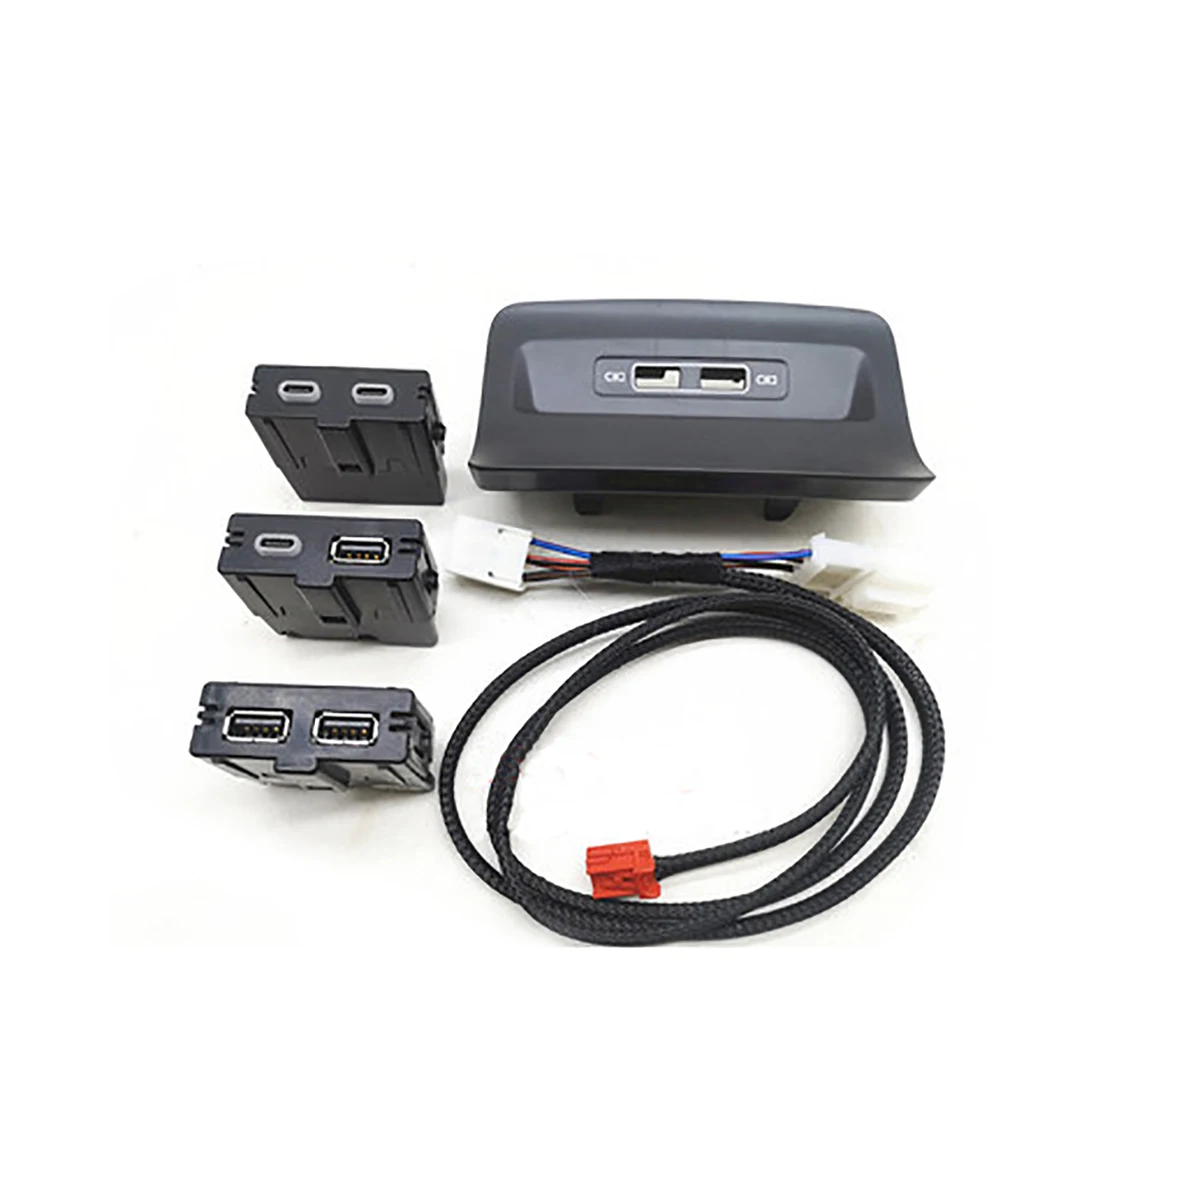 ДЛЯ Kodiaq GT коробка для подлокотника USB коробка для заднего подлокотника с двухпортовым USB-зарядным устройством 5QD 035 726 Изображение 0